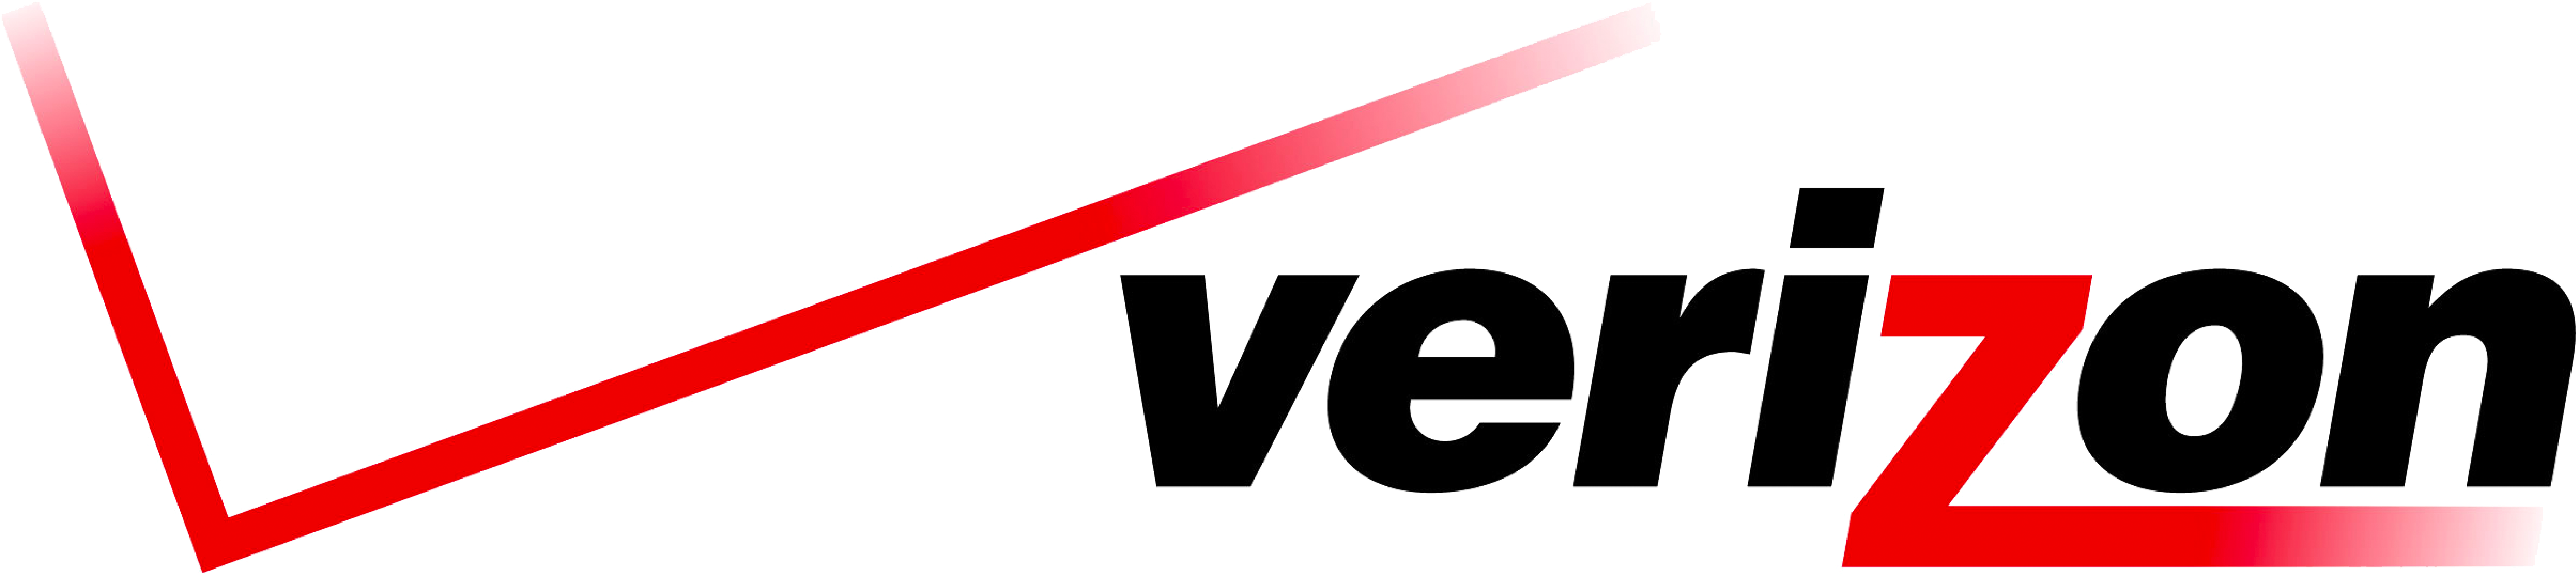 Verizon-logo.png